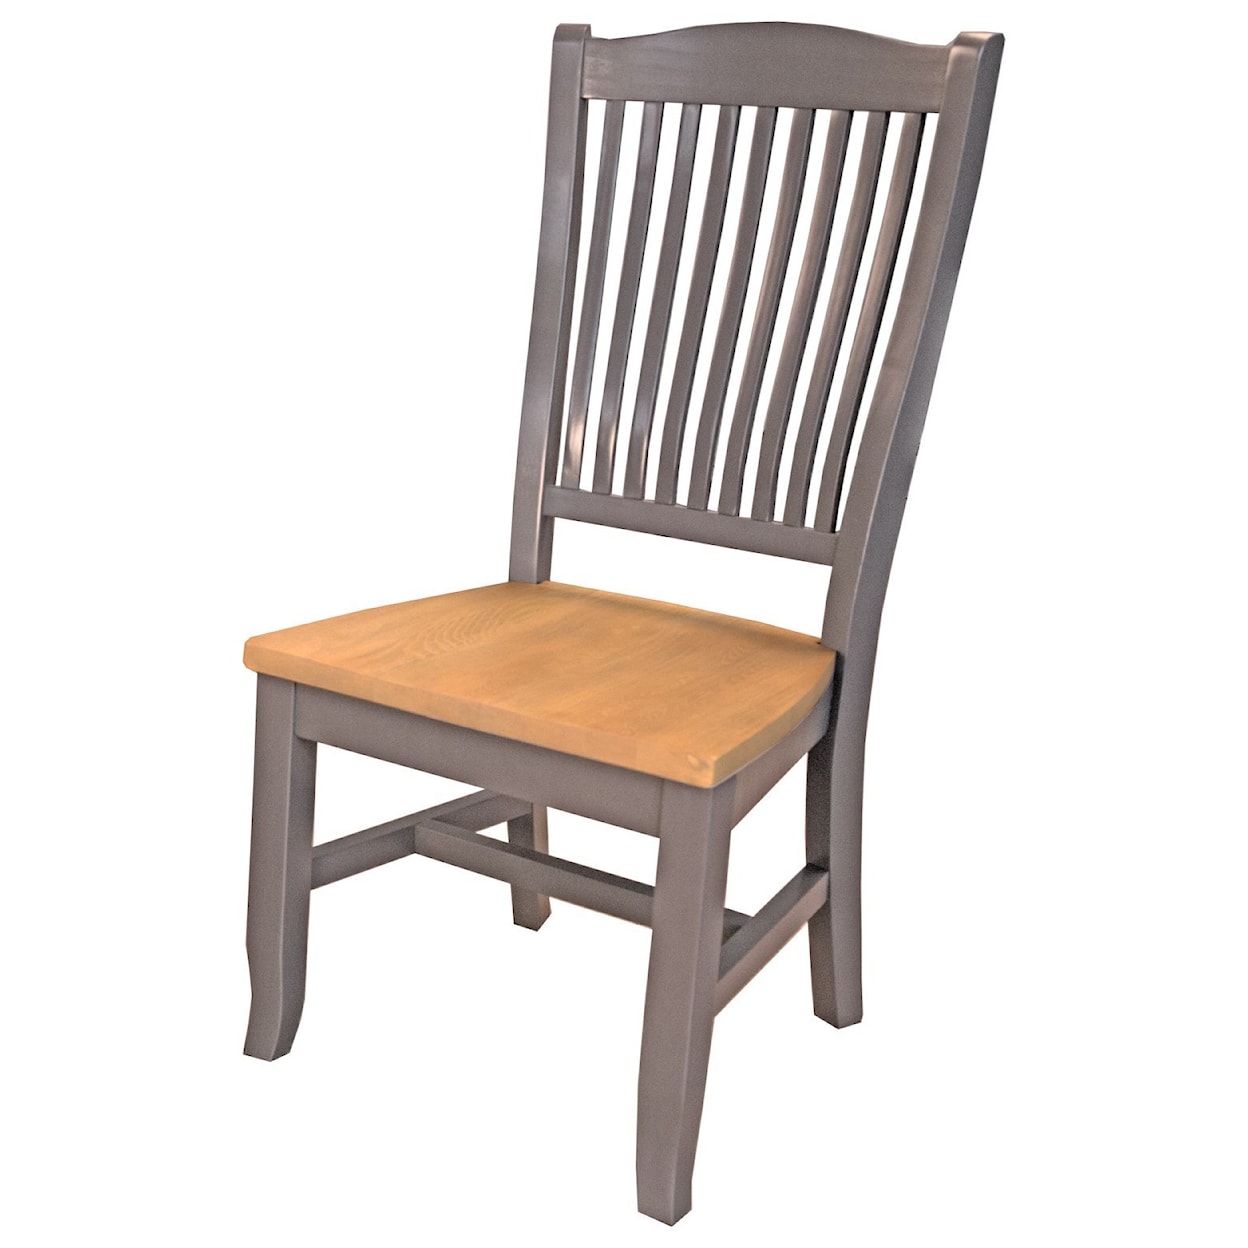 A-A Port Townsend Slatback Side Chair